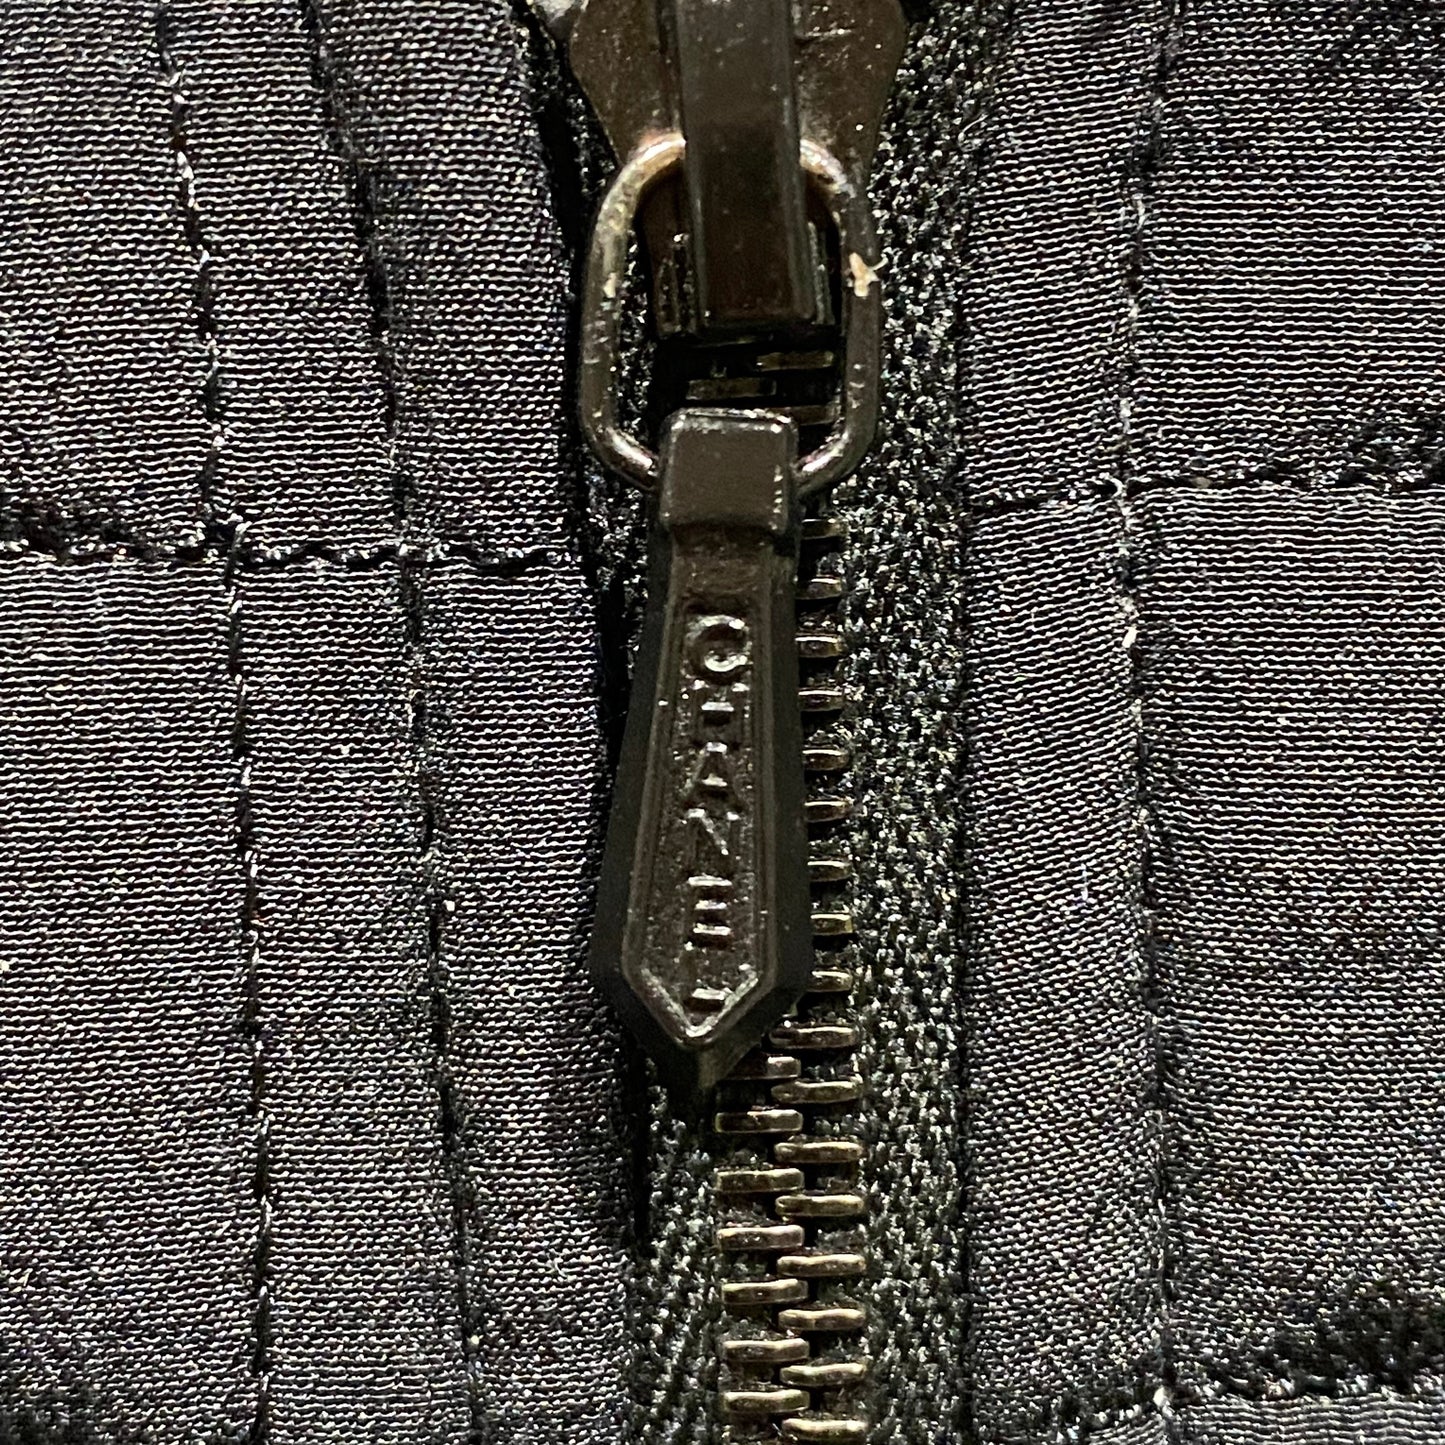 Chanel 2000 Transition Collection Black Padded Sleeveless zipped waistcoat (UK Small Size 10)